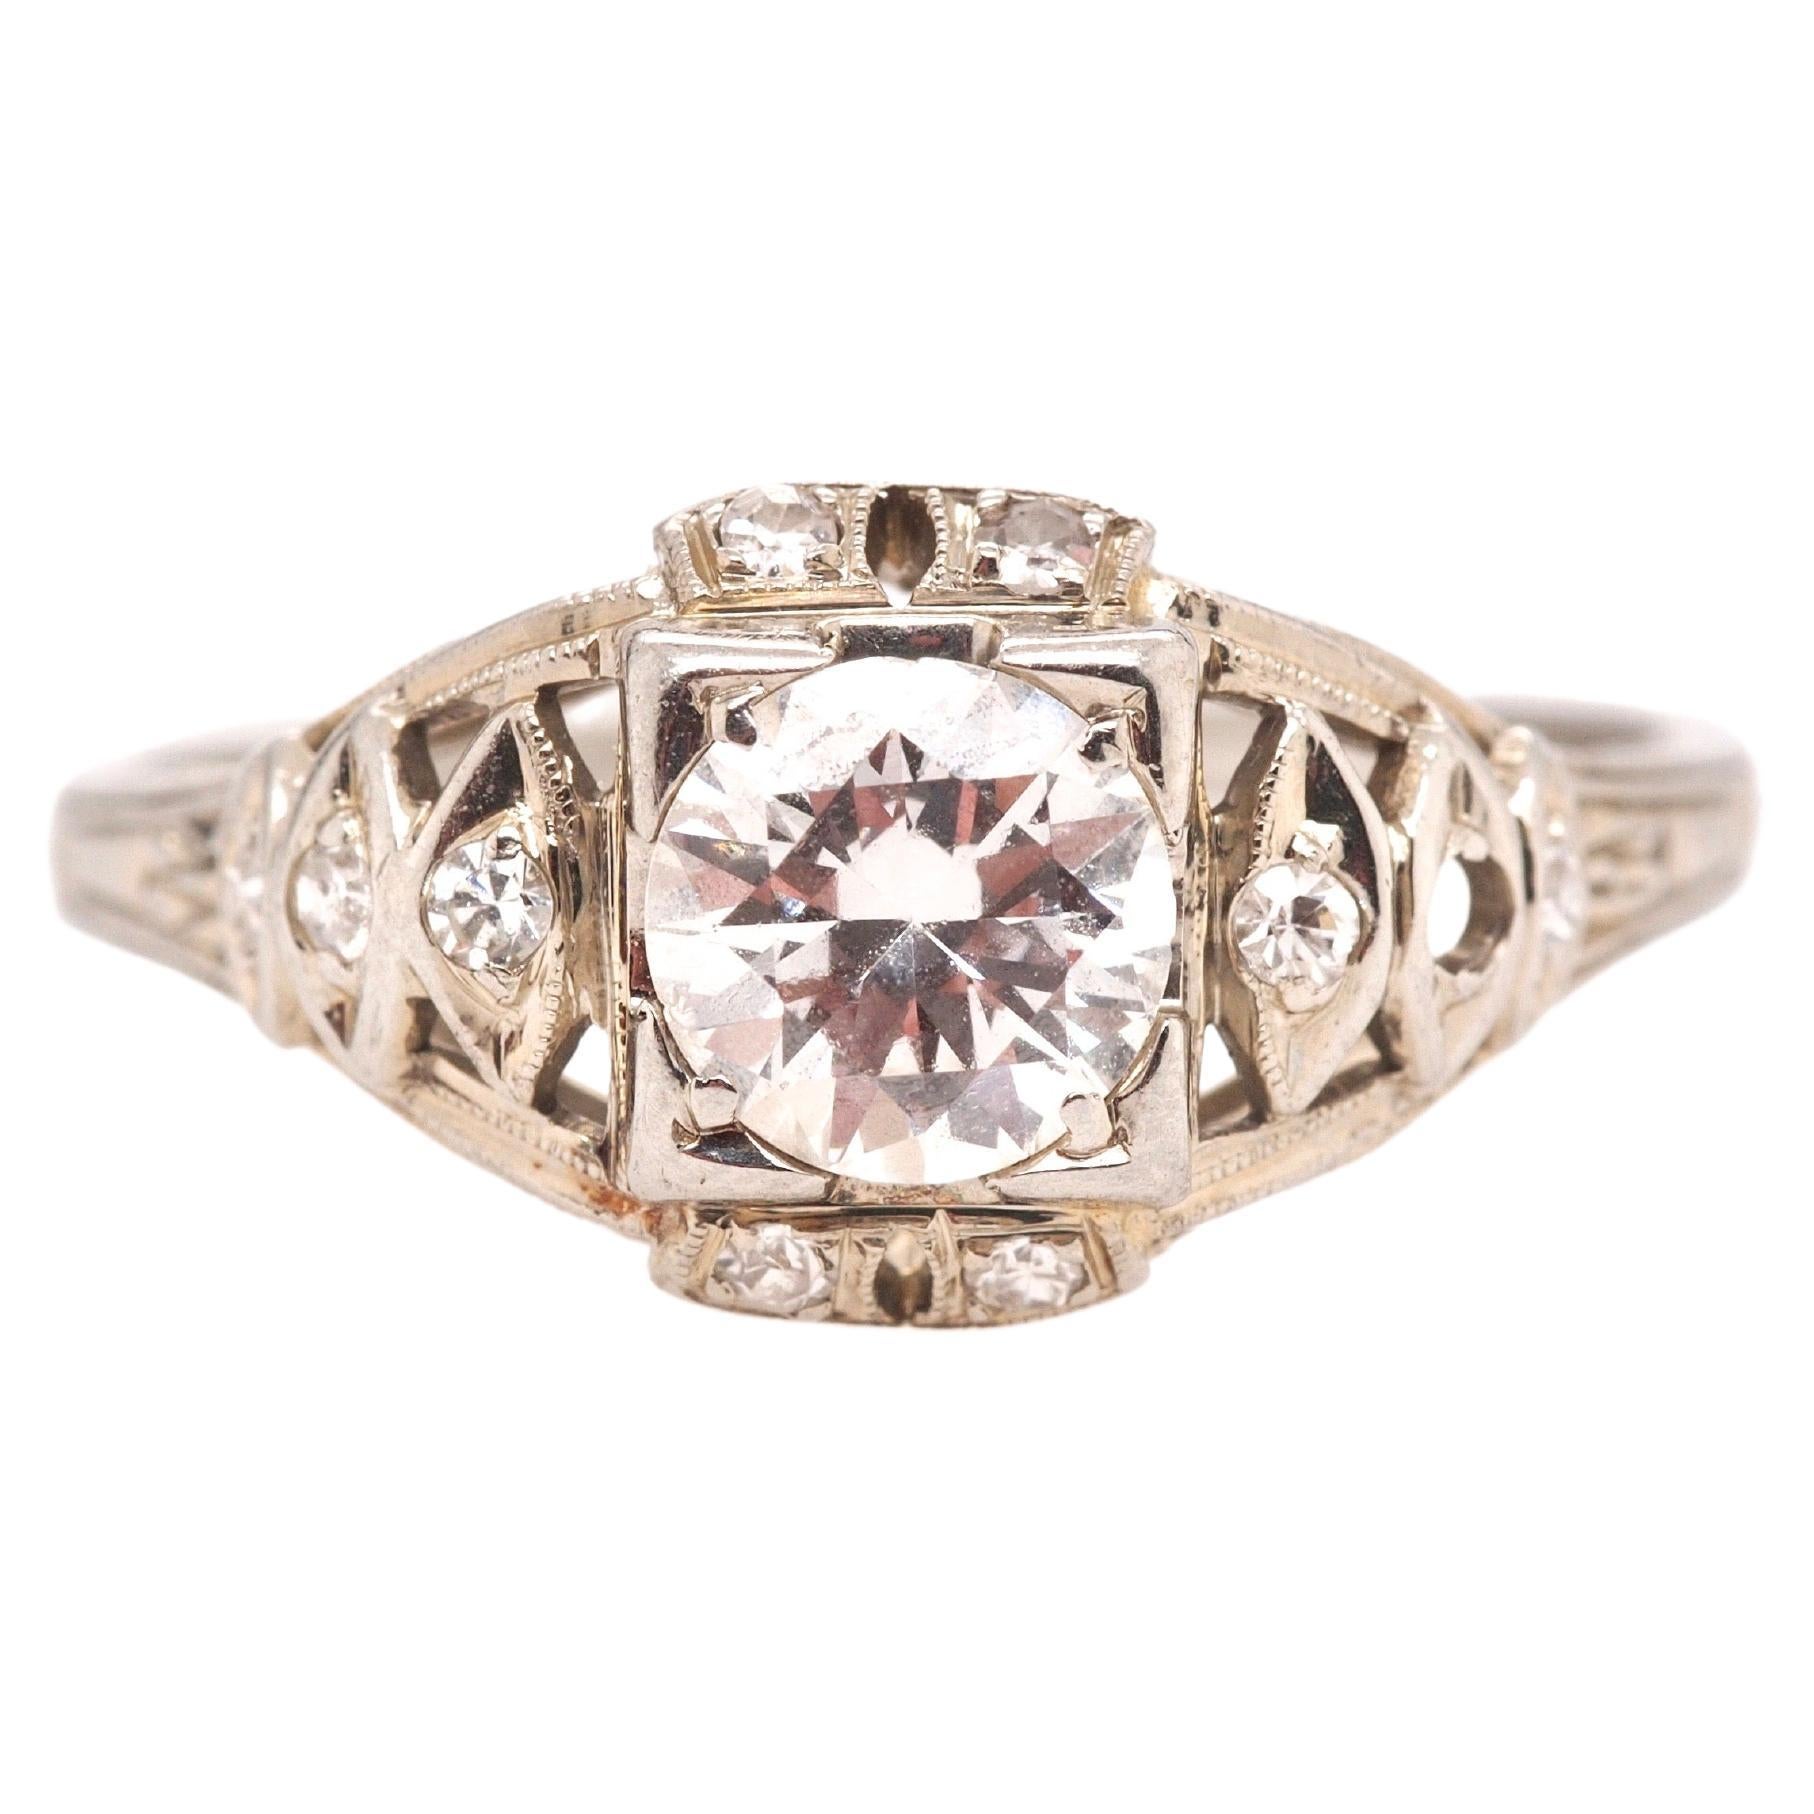 1940s Art Deco 18K White Gold .60ct Diamond Engagement Ring